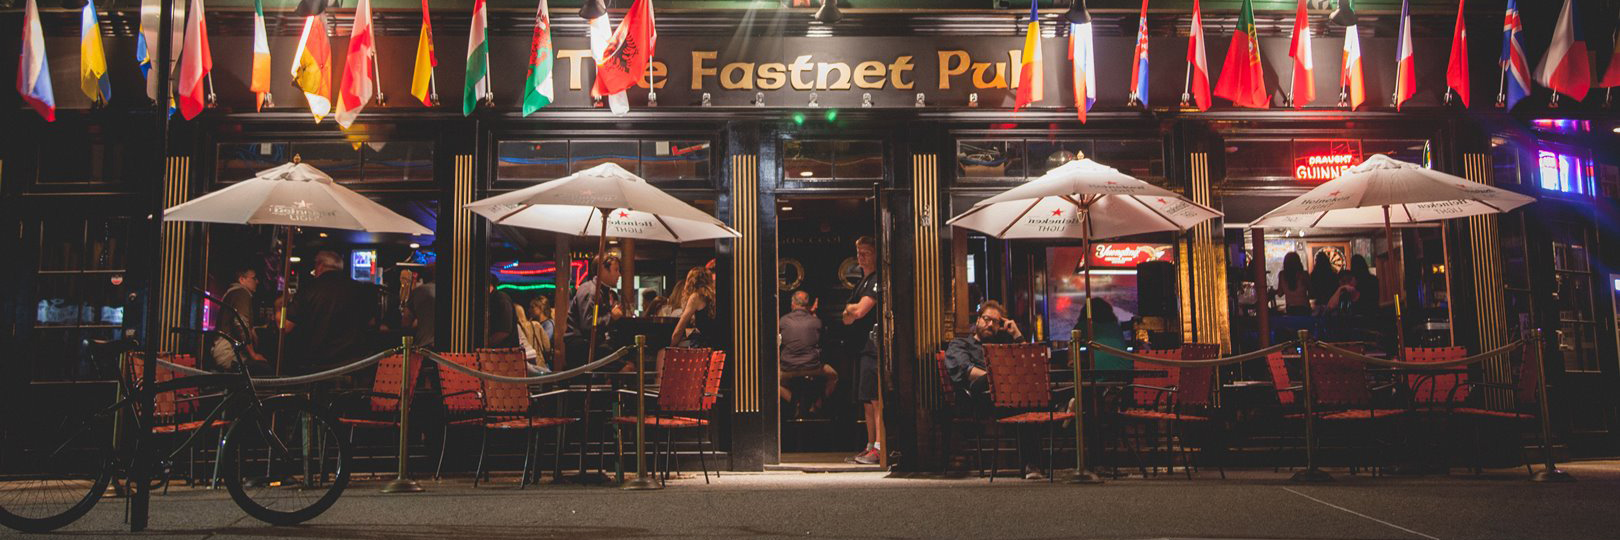 The Fastnet Pub